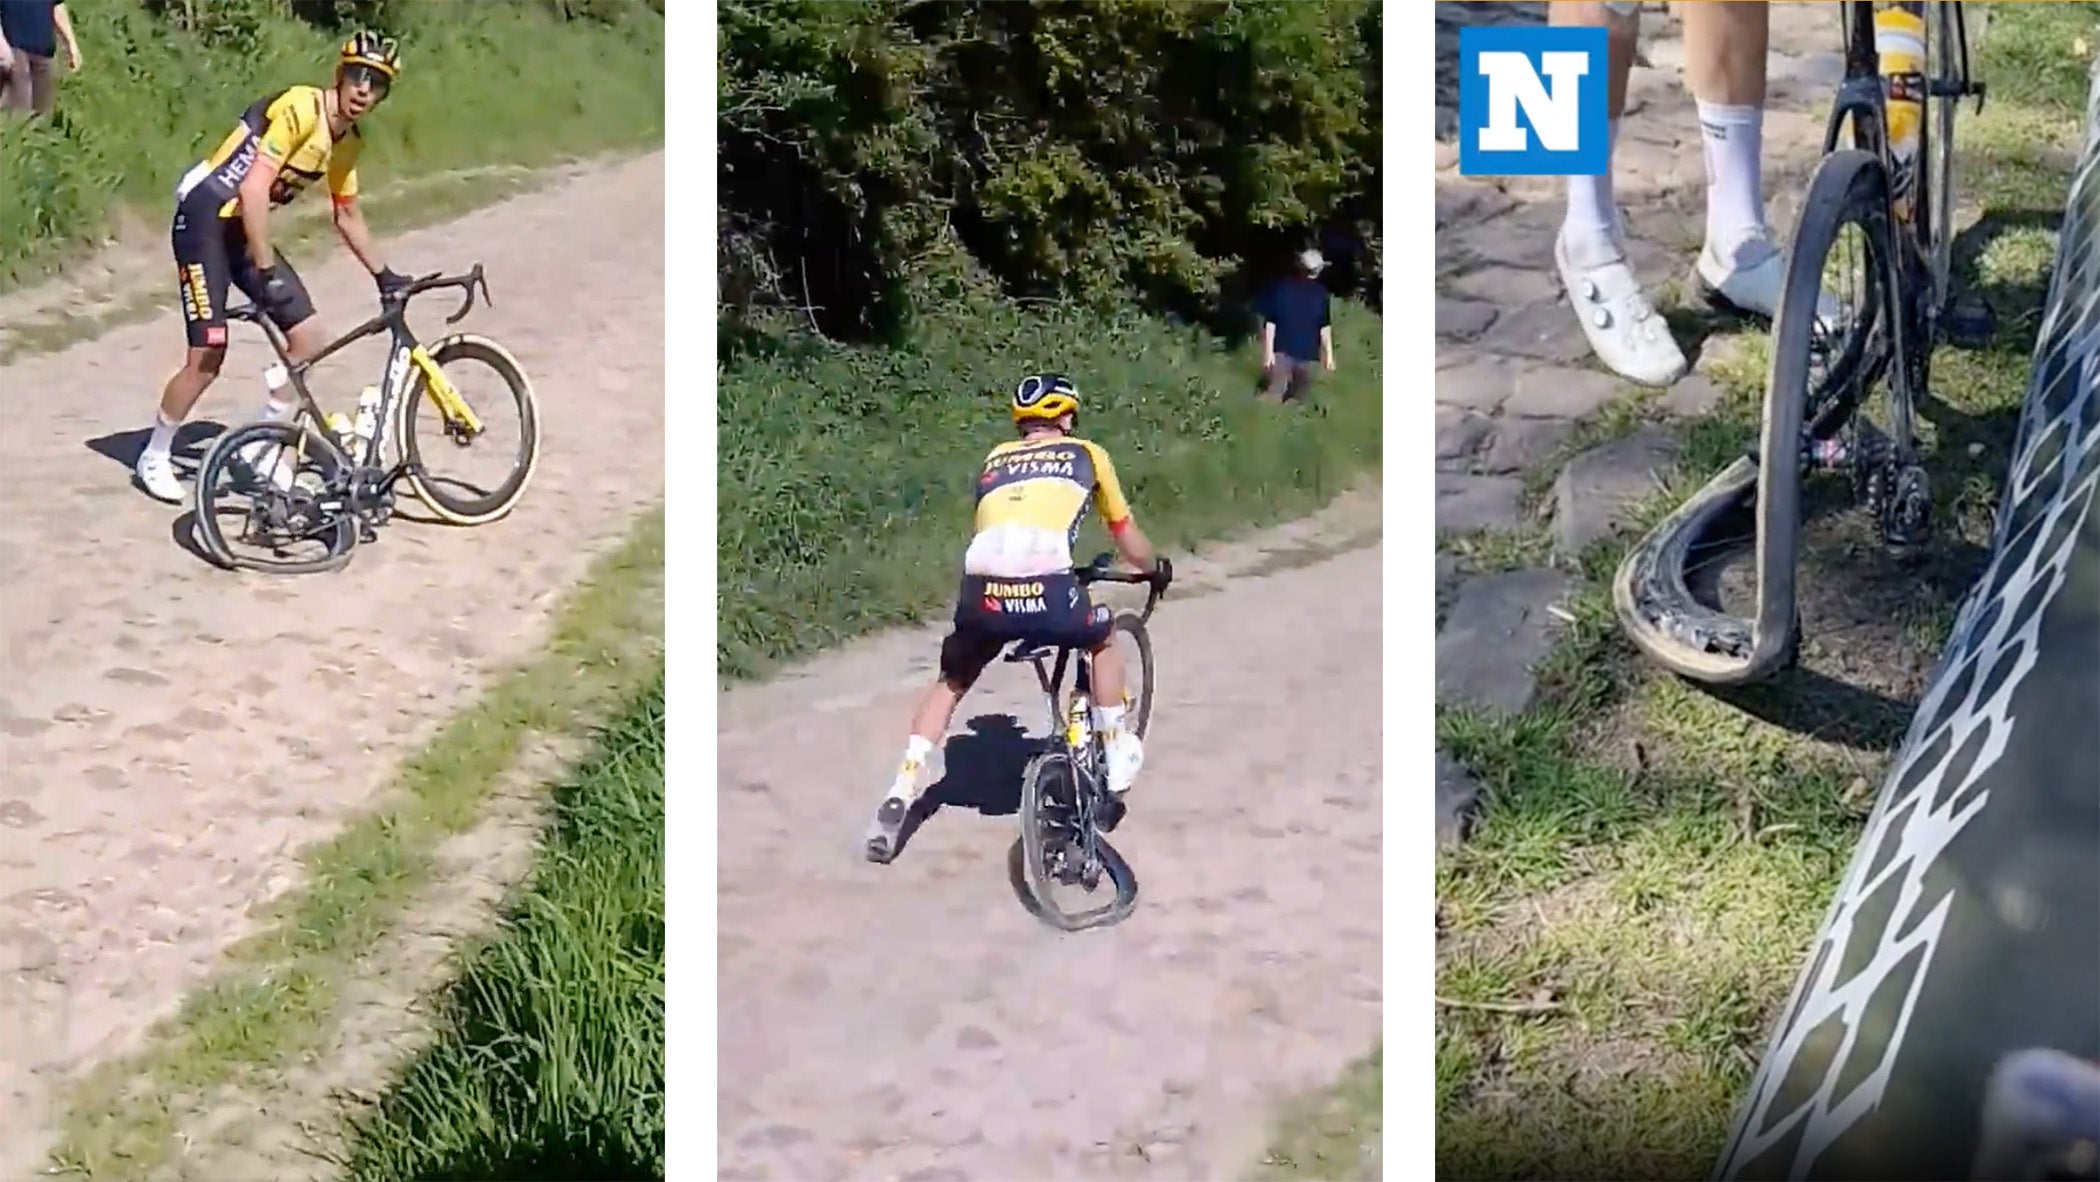 Watch videos of Wout van Aert and Christophe Laporte riding broken wheels at Paris-Roubaix